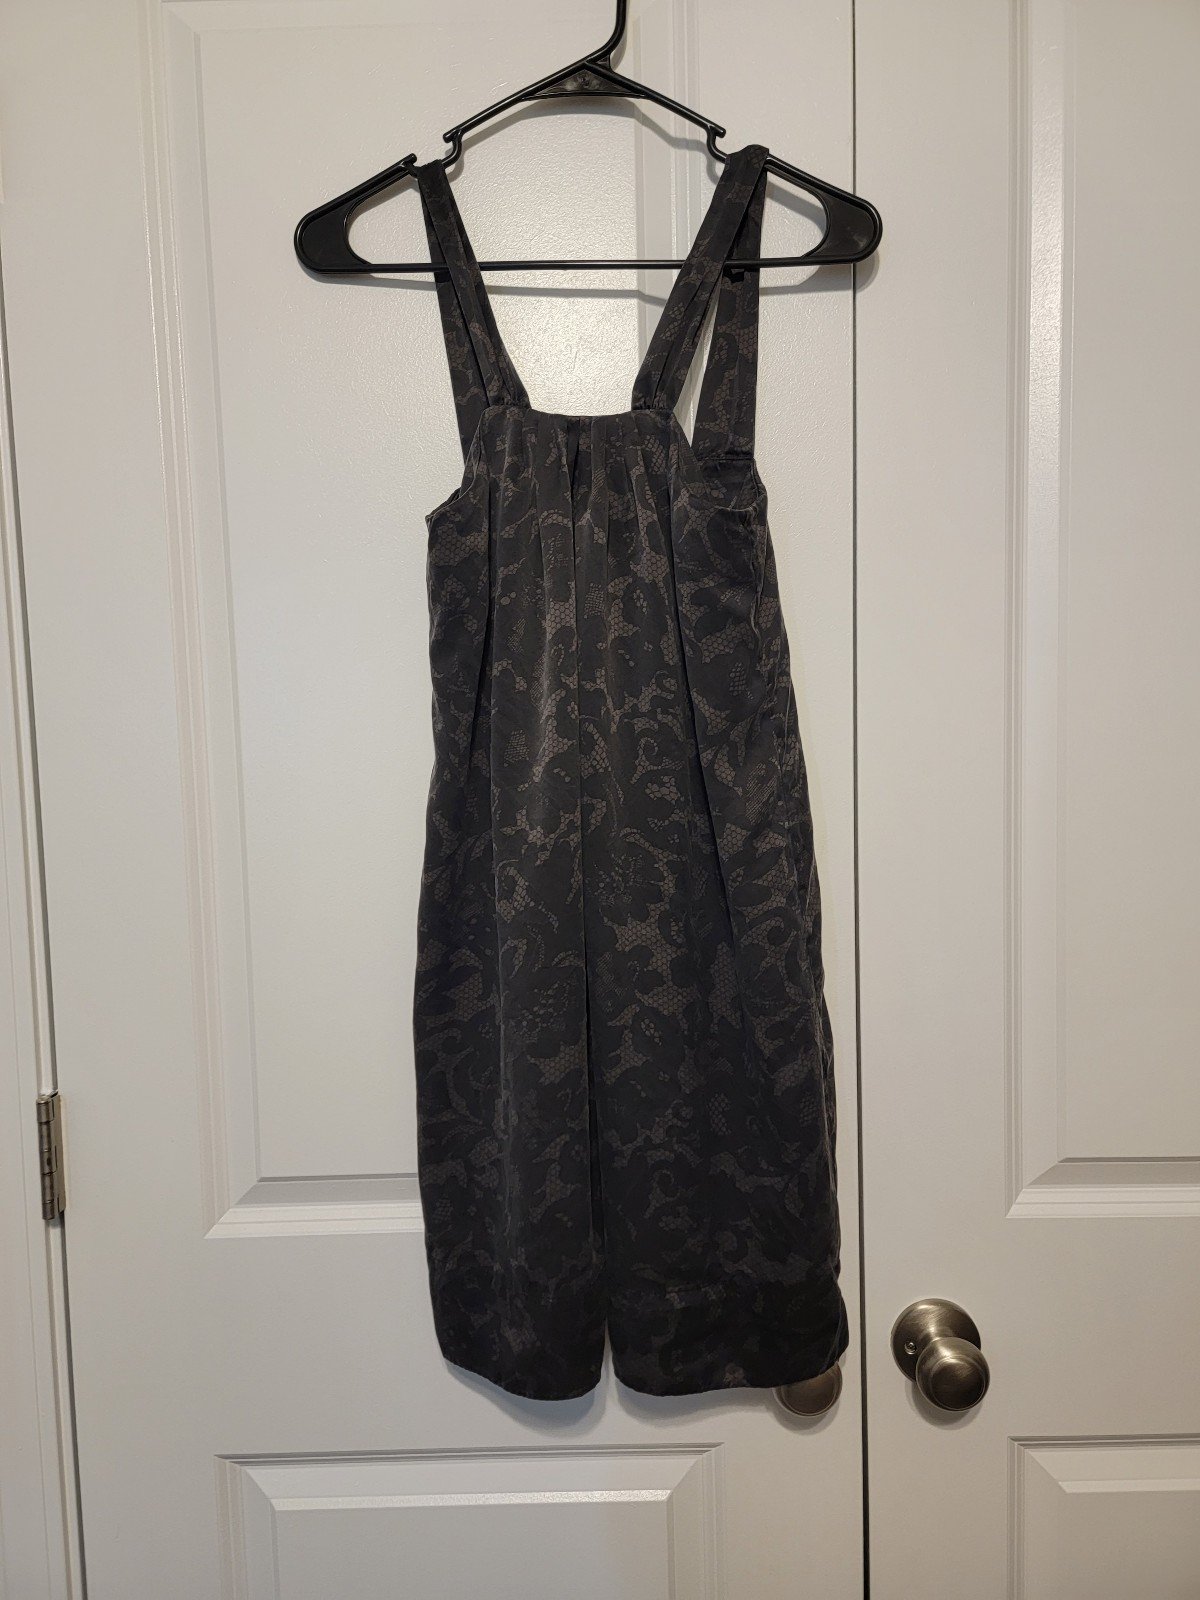 Latest  BANANA REPUBLIC Black & Gray SILK Jumper Sheath Dress Sz 0 mgAnSVRdS for sale